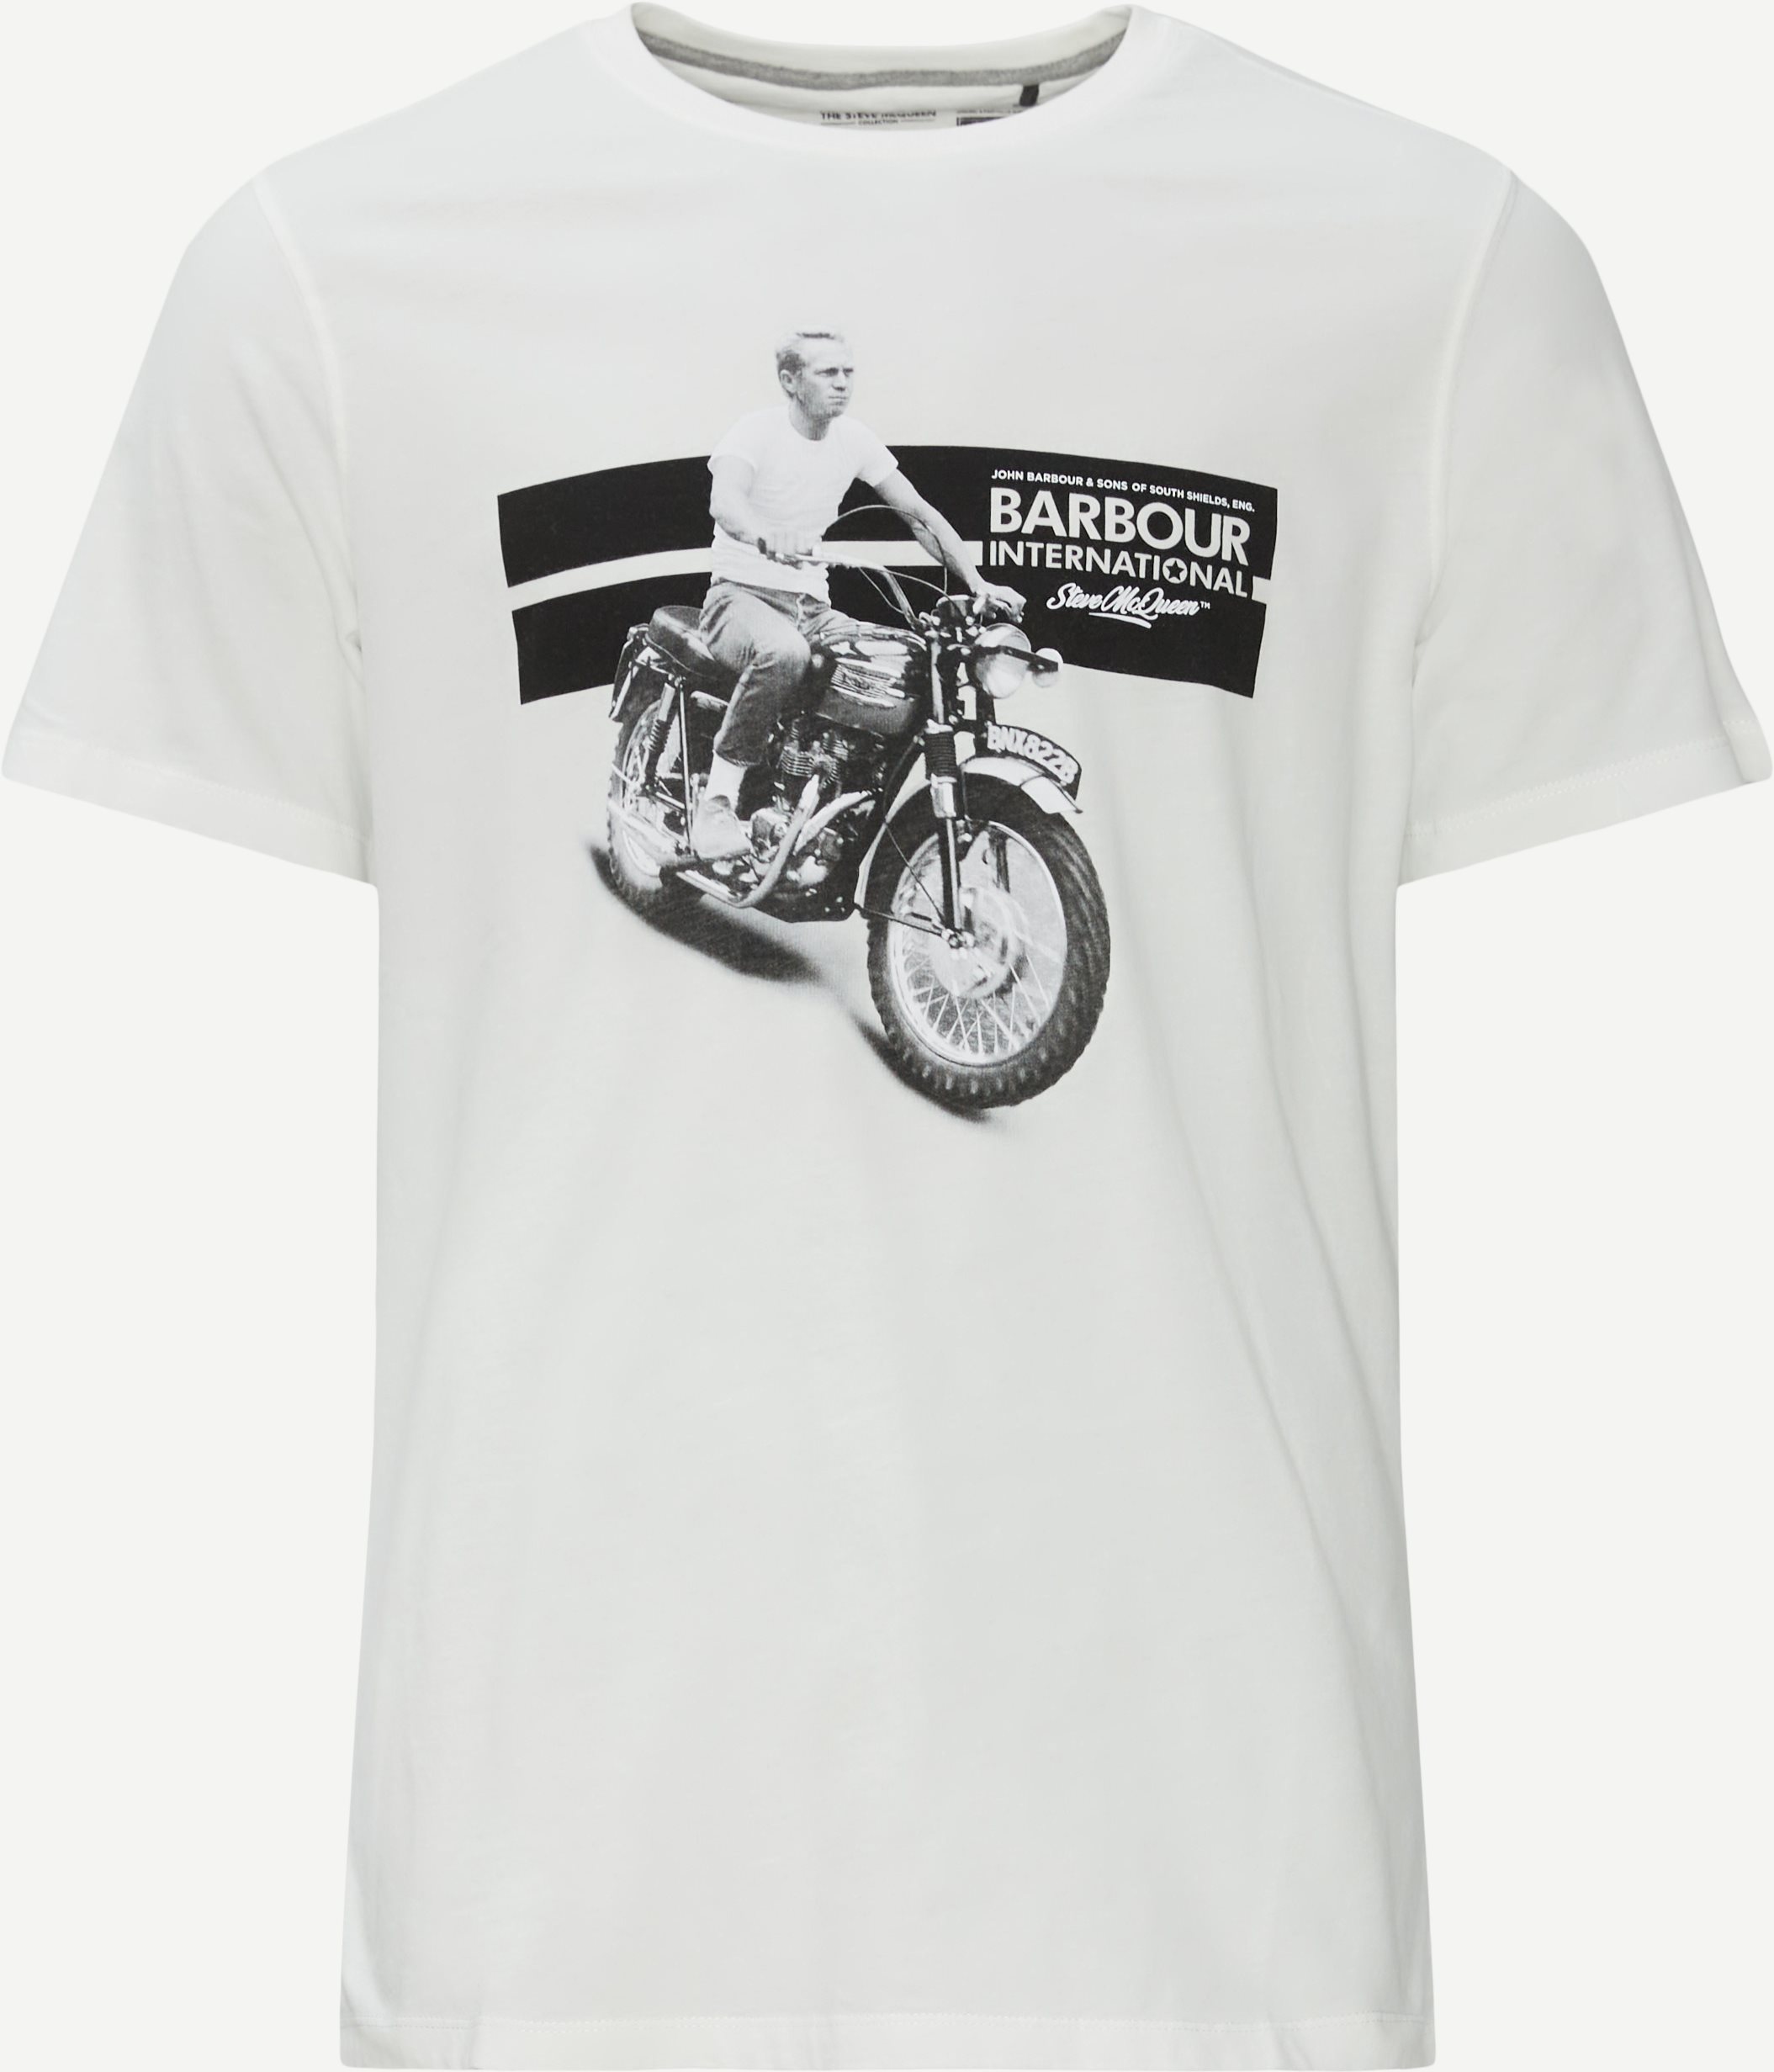 Steve McQueen Chase T-shirt - T-shirts - Regular fit - White